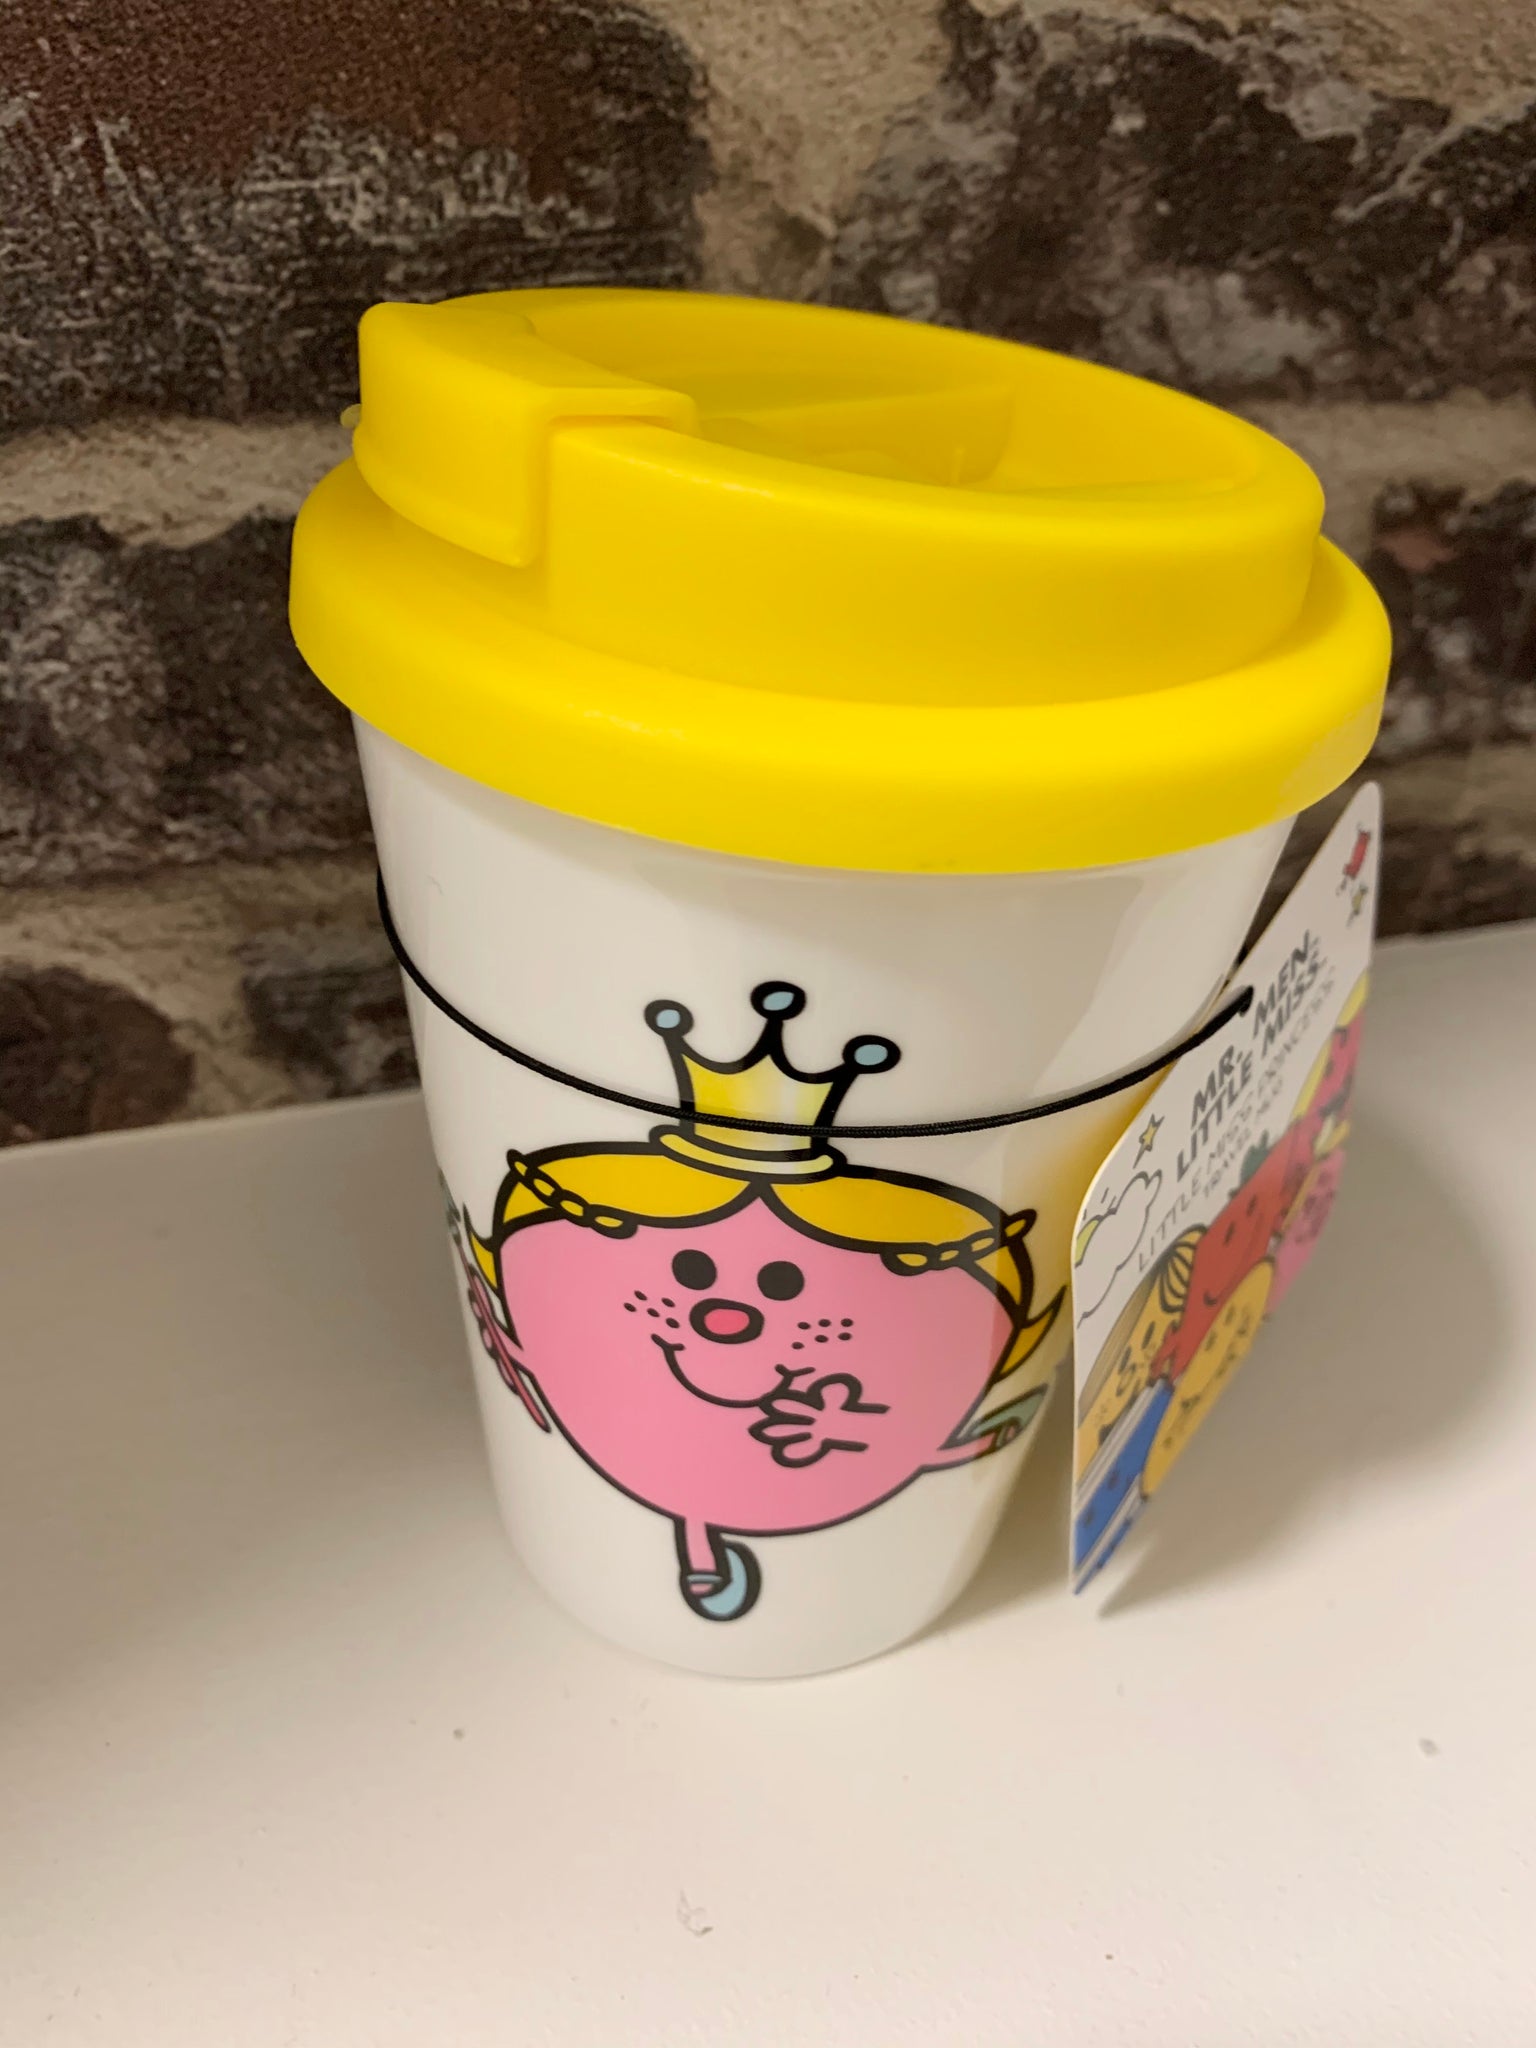 Little miss travel mug